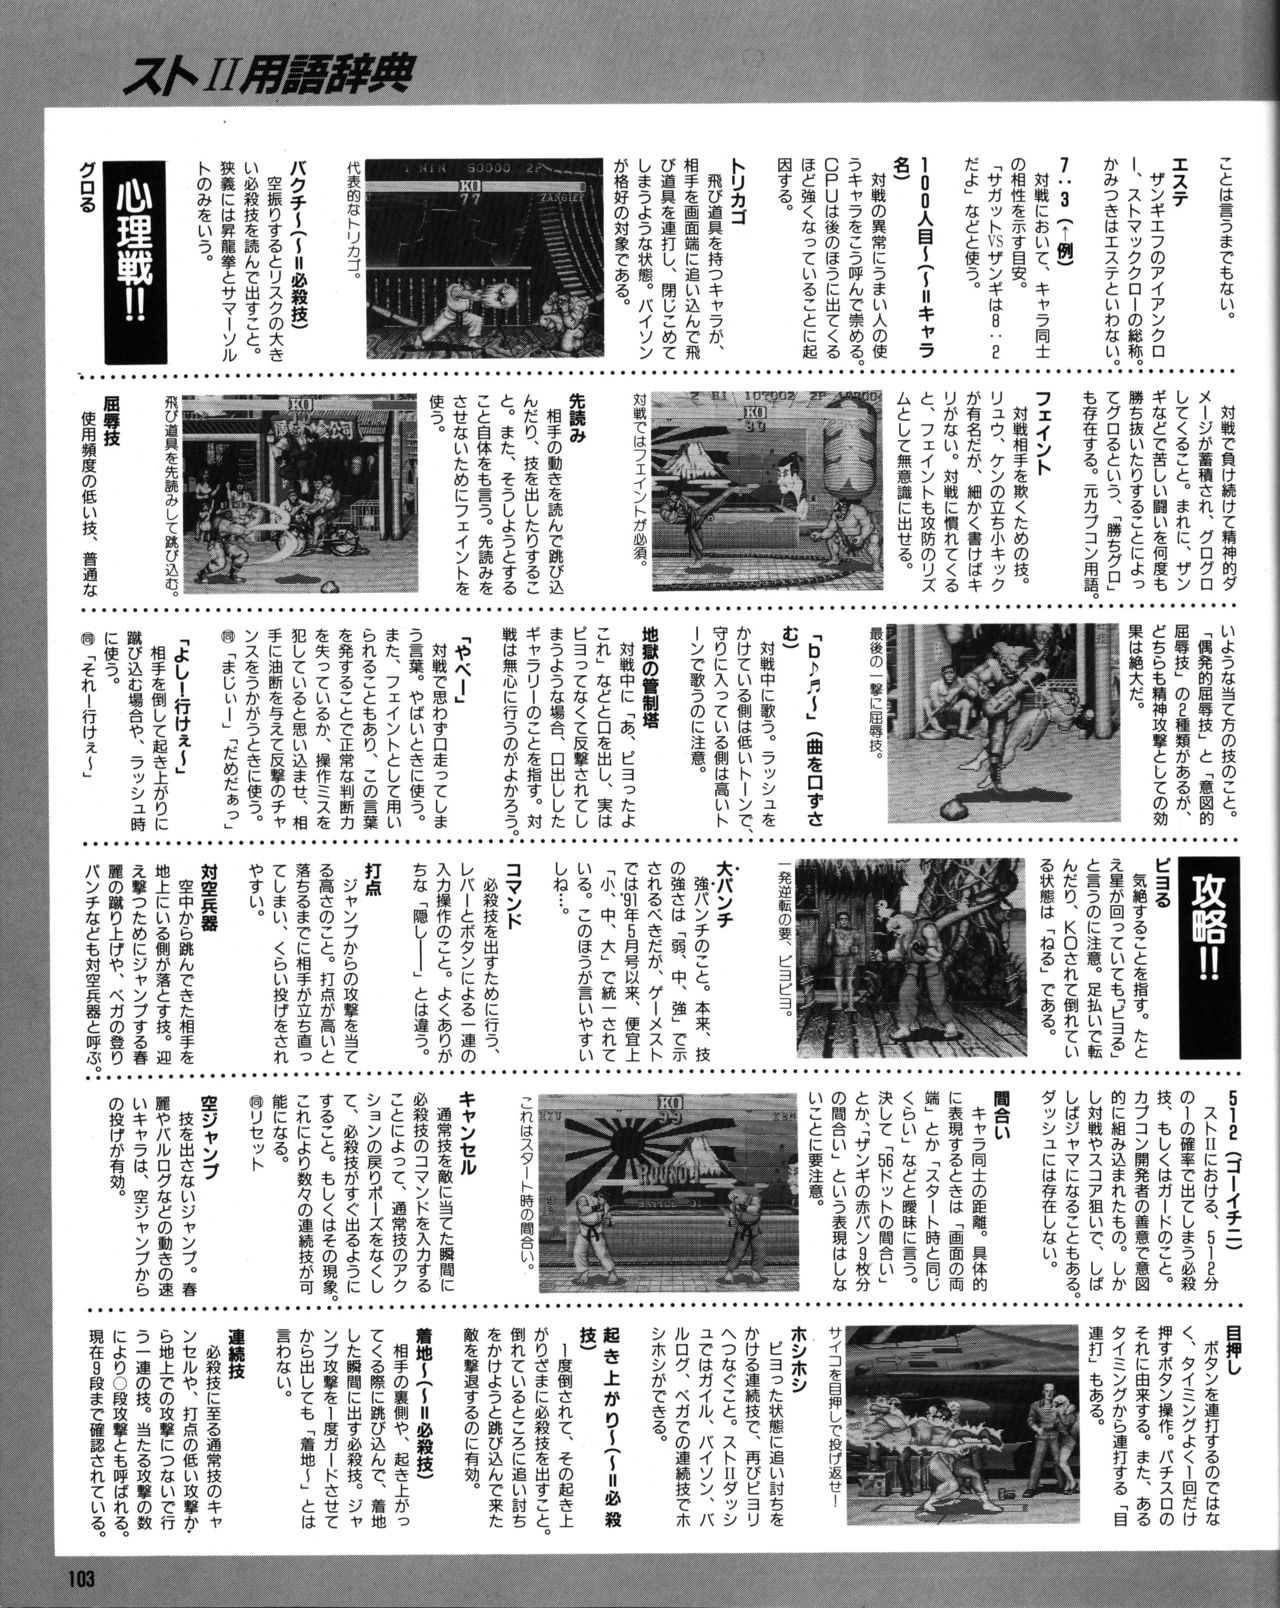 Street Fighter II Dash - Gamest special issue 77 104